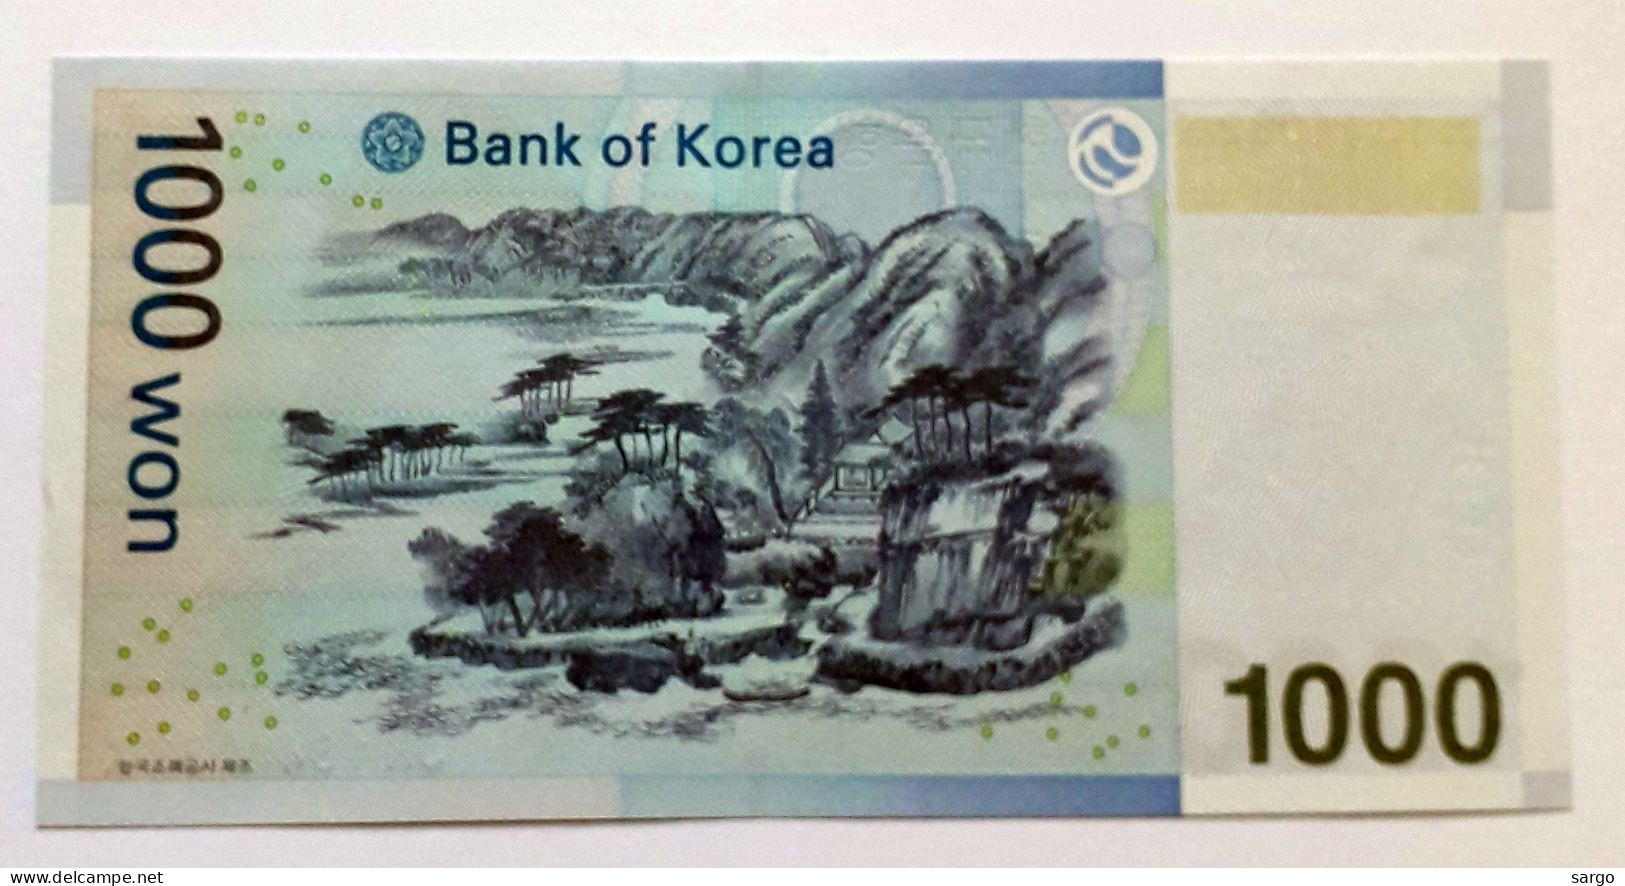 SOUTH KOREA - 1.000 WON  - 2007  - UNC - P 54 - BANKNOTES - PAPER MONEY - CARTAMONETA - - Korea, South